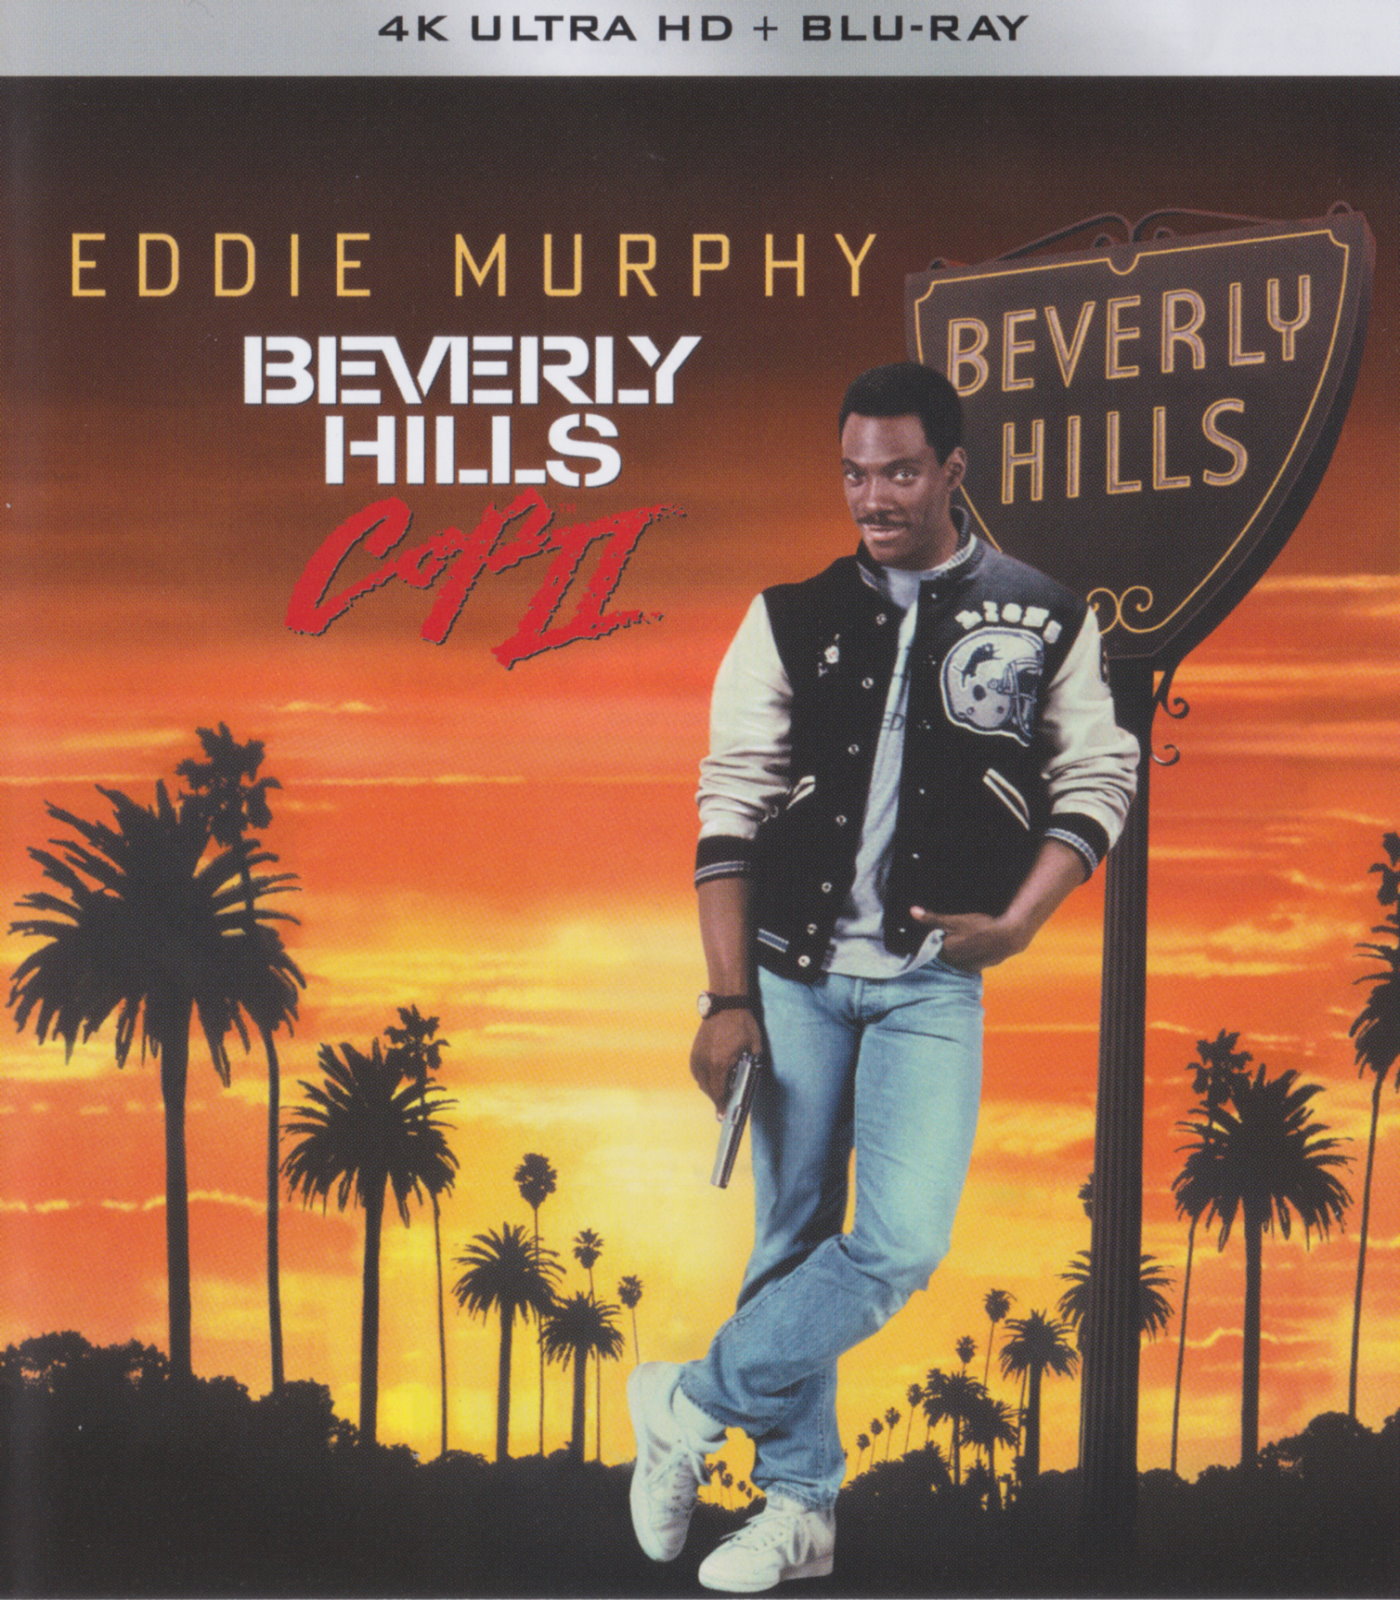 Cover - Beverly Hills Cop II.jpg